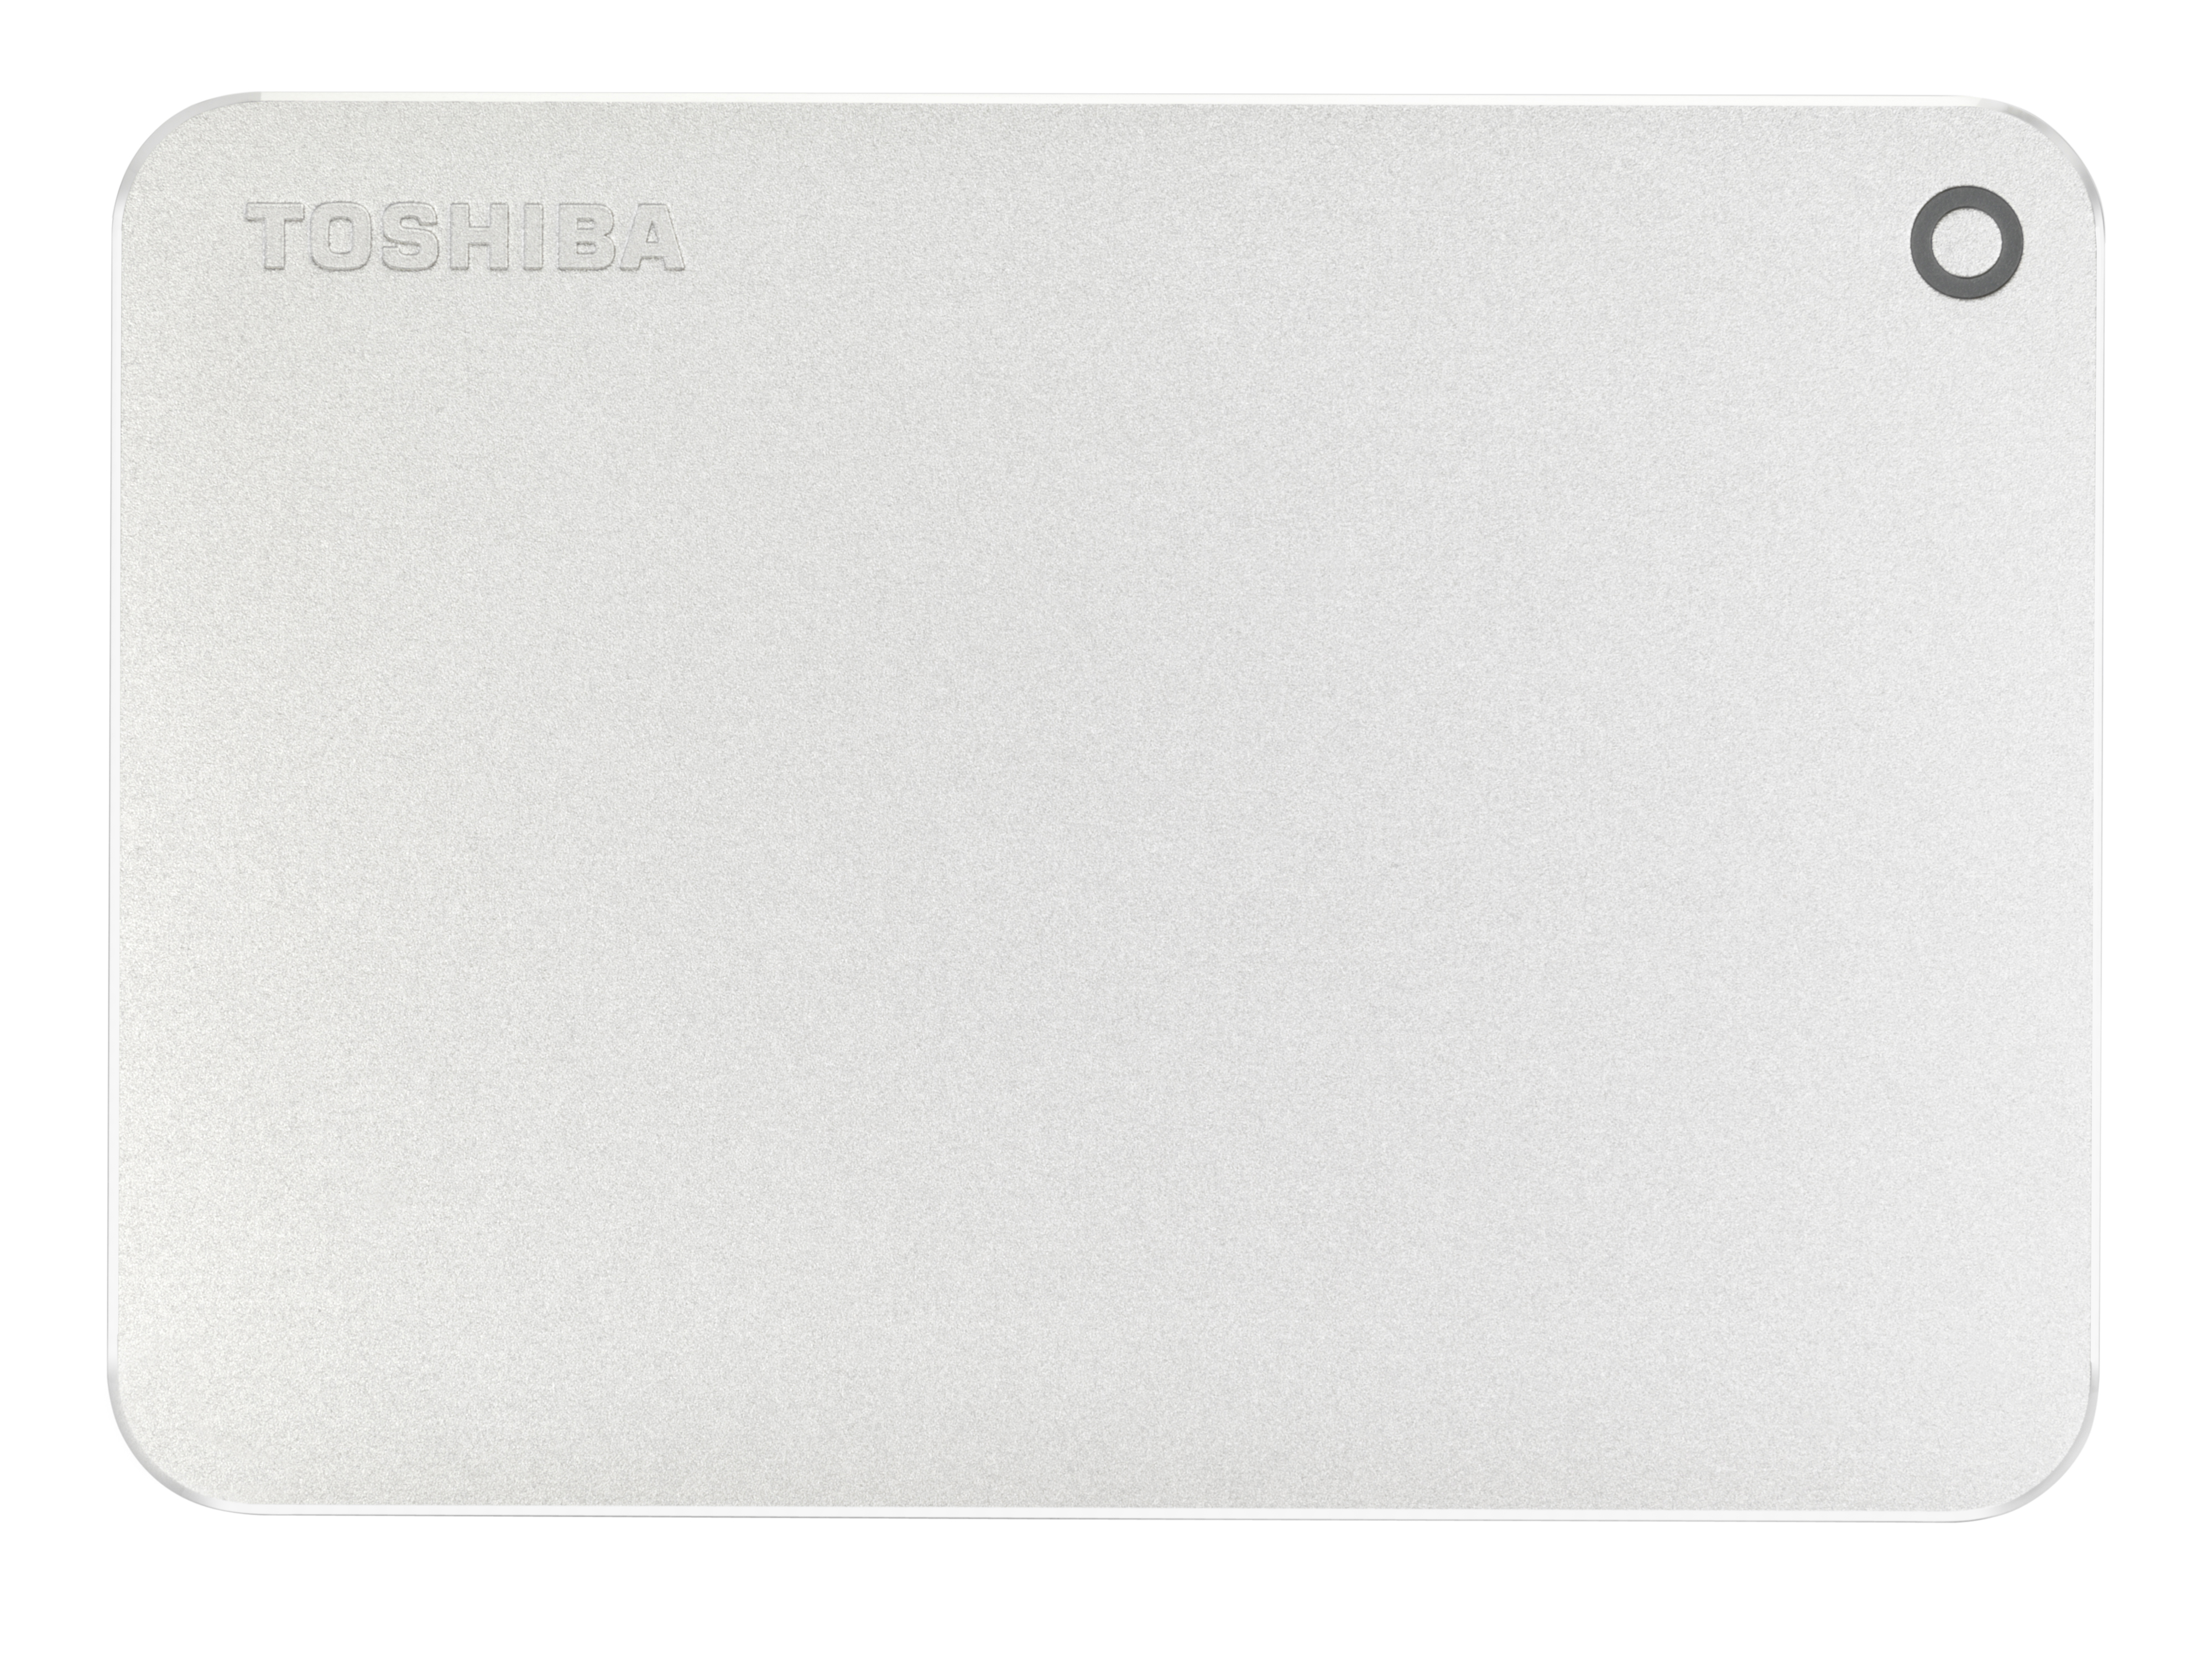 TB Silber Canvio extern, TOSHIBA 1 2,5 Zoll, Premium HDD, Festplatte,